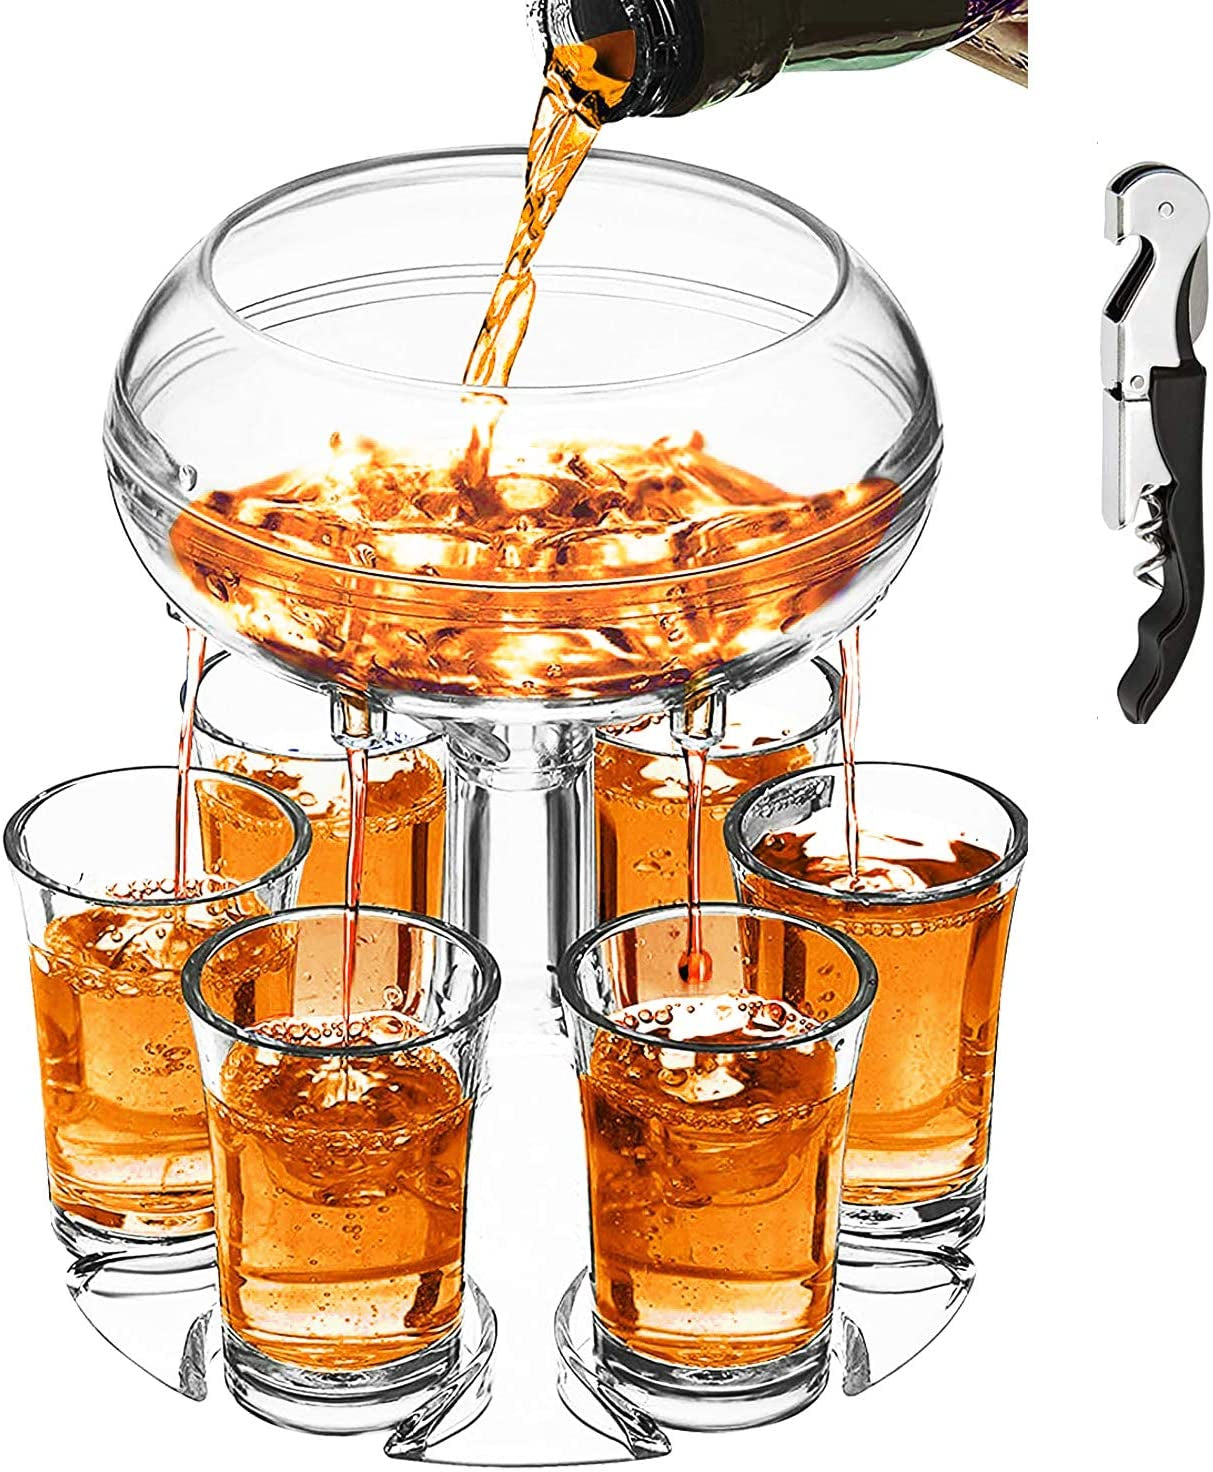 Adjustable Shot Glass Dispenser: Plexiglass, Includes 6 Drinking Glasses